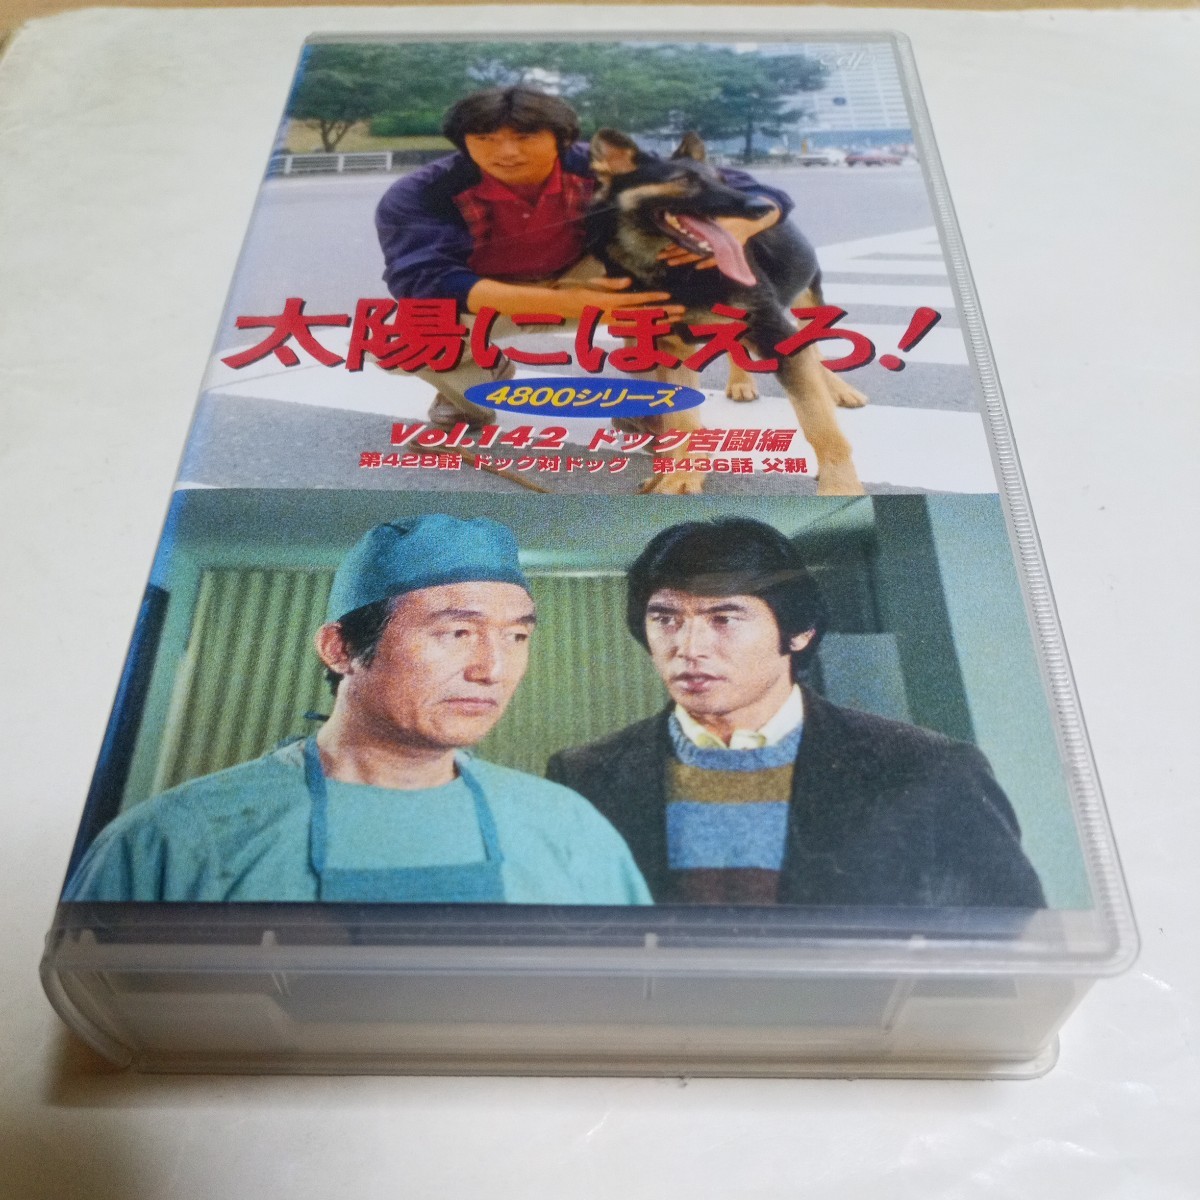 VHS video Taiyou ni Hoero! 4800 series Vol.142dok.. compilation performance * stone .. next ., god rice field regular shining,..., dragon . futoshi, mountain under Shinji,... other 